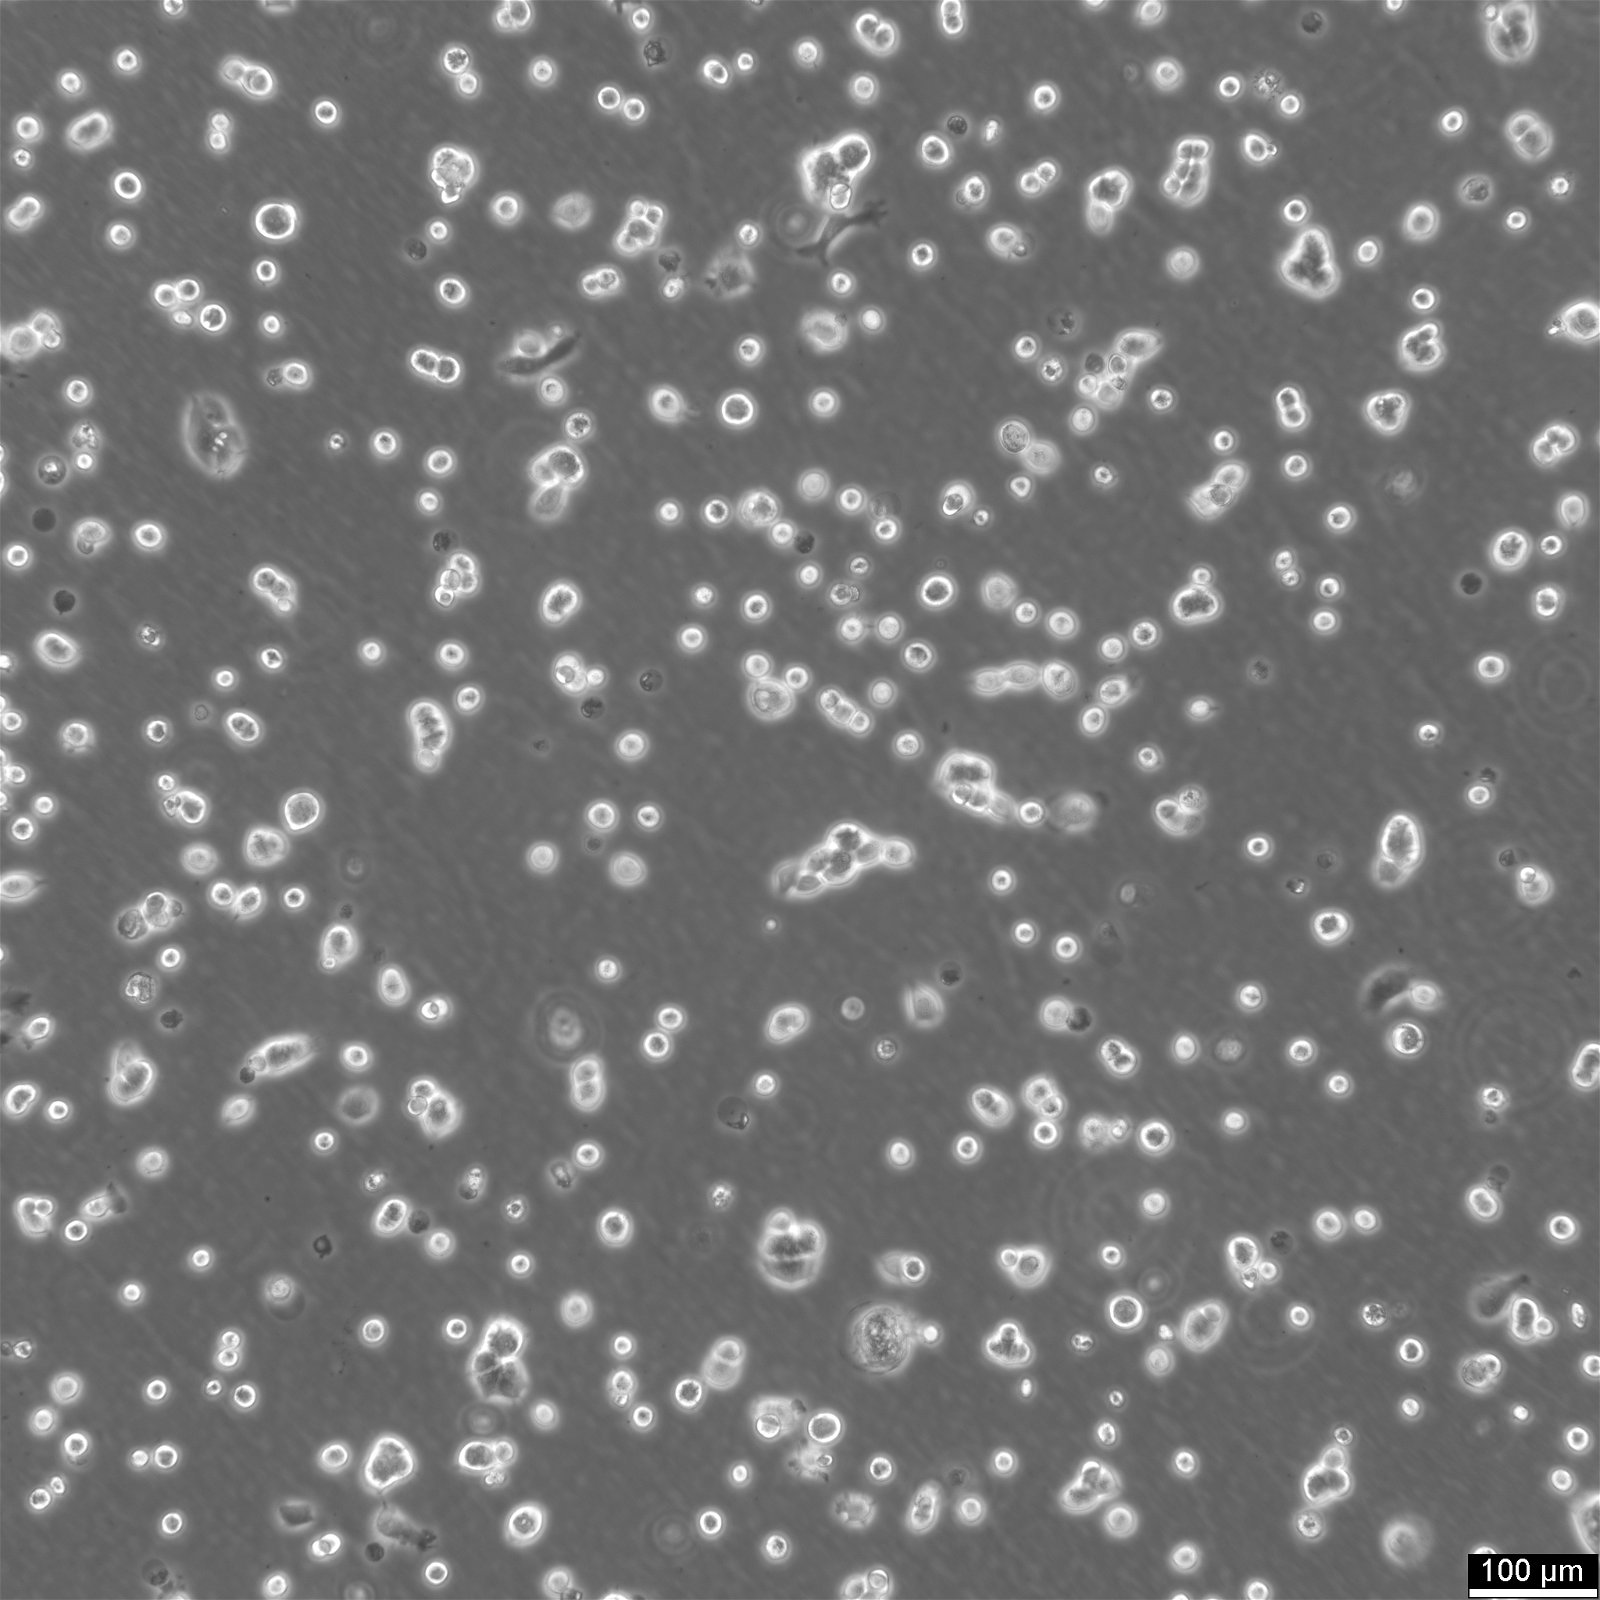 Cellules NCI-H358